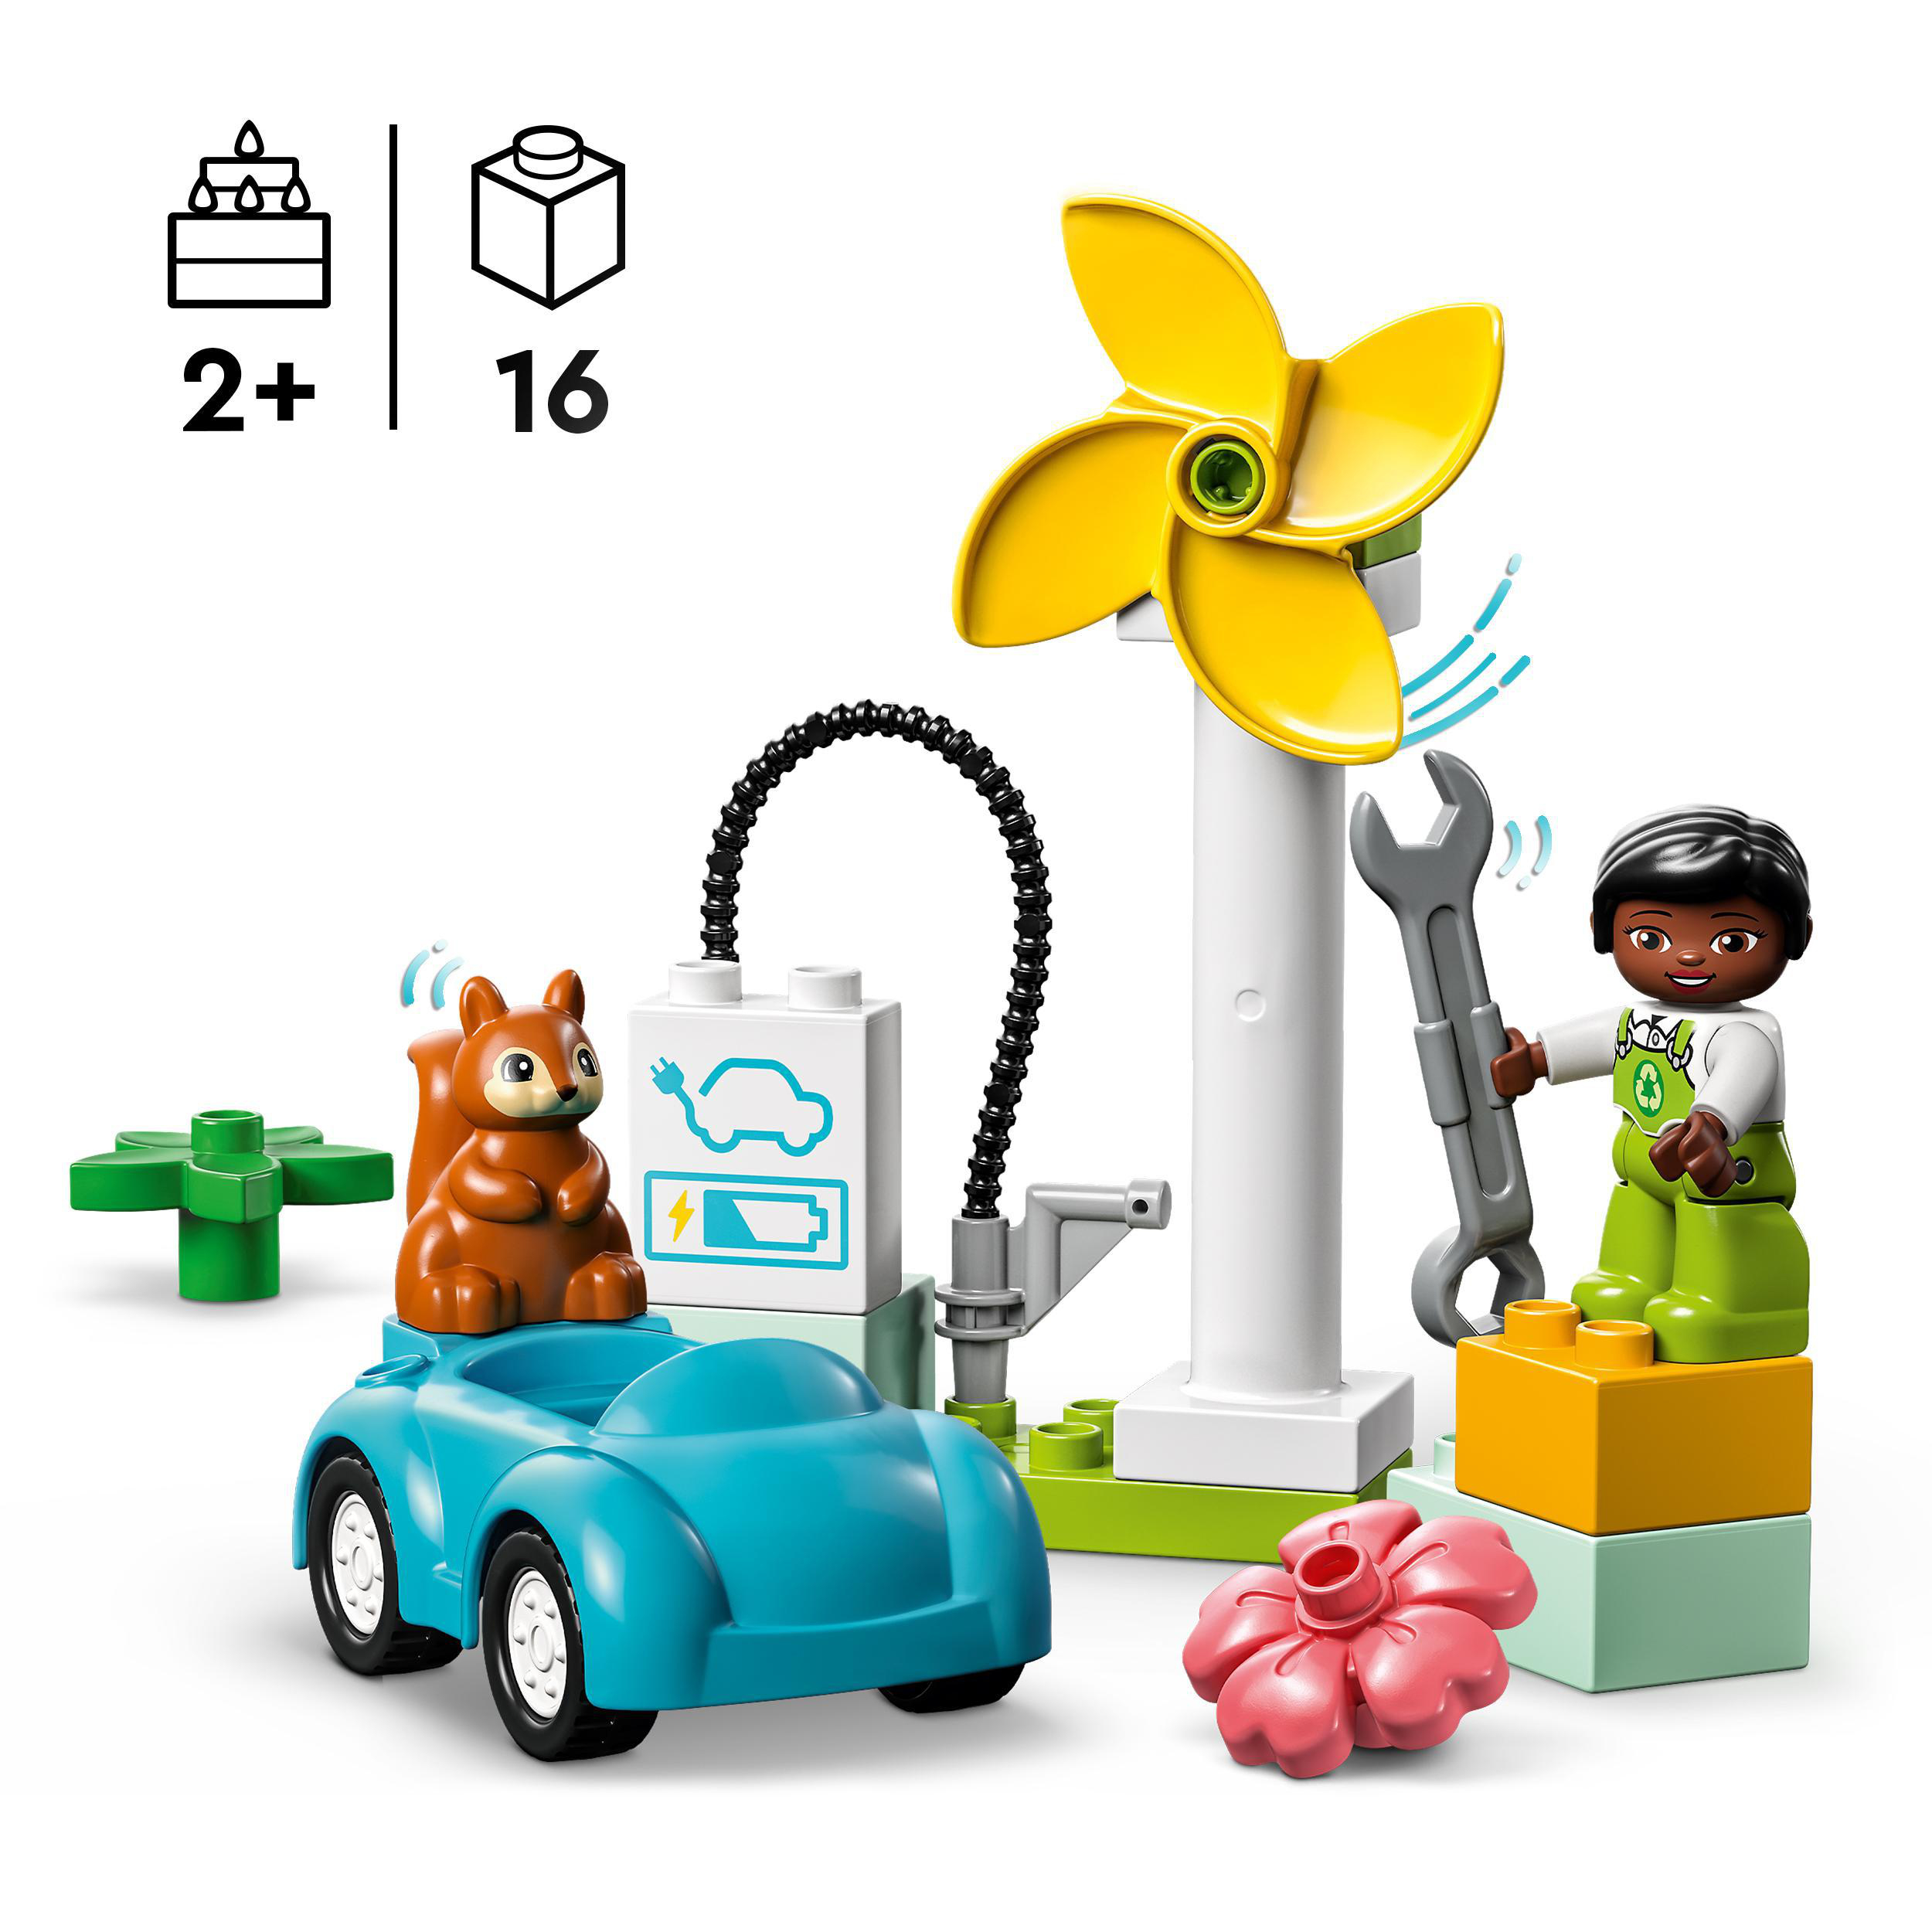 LEGO DUPLO Town 10985 Windrad Mehrfarbig Bausatz, und Elektroauto